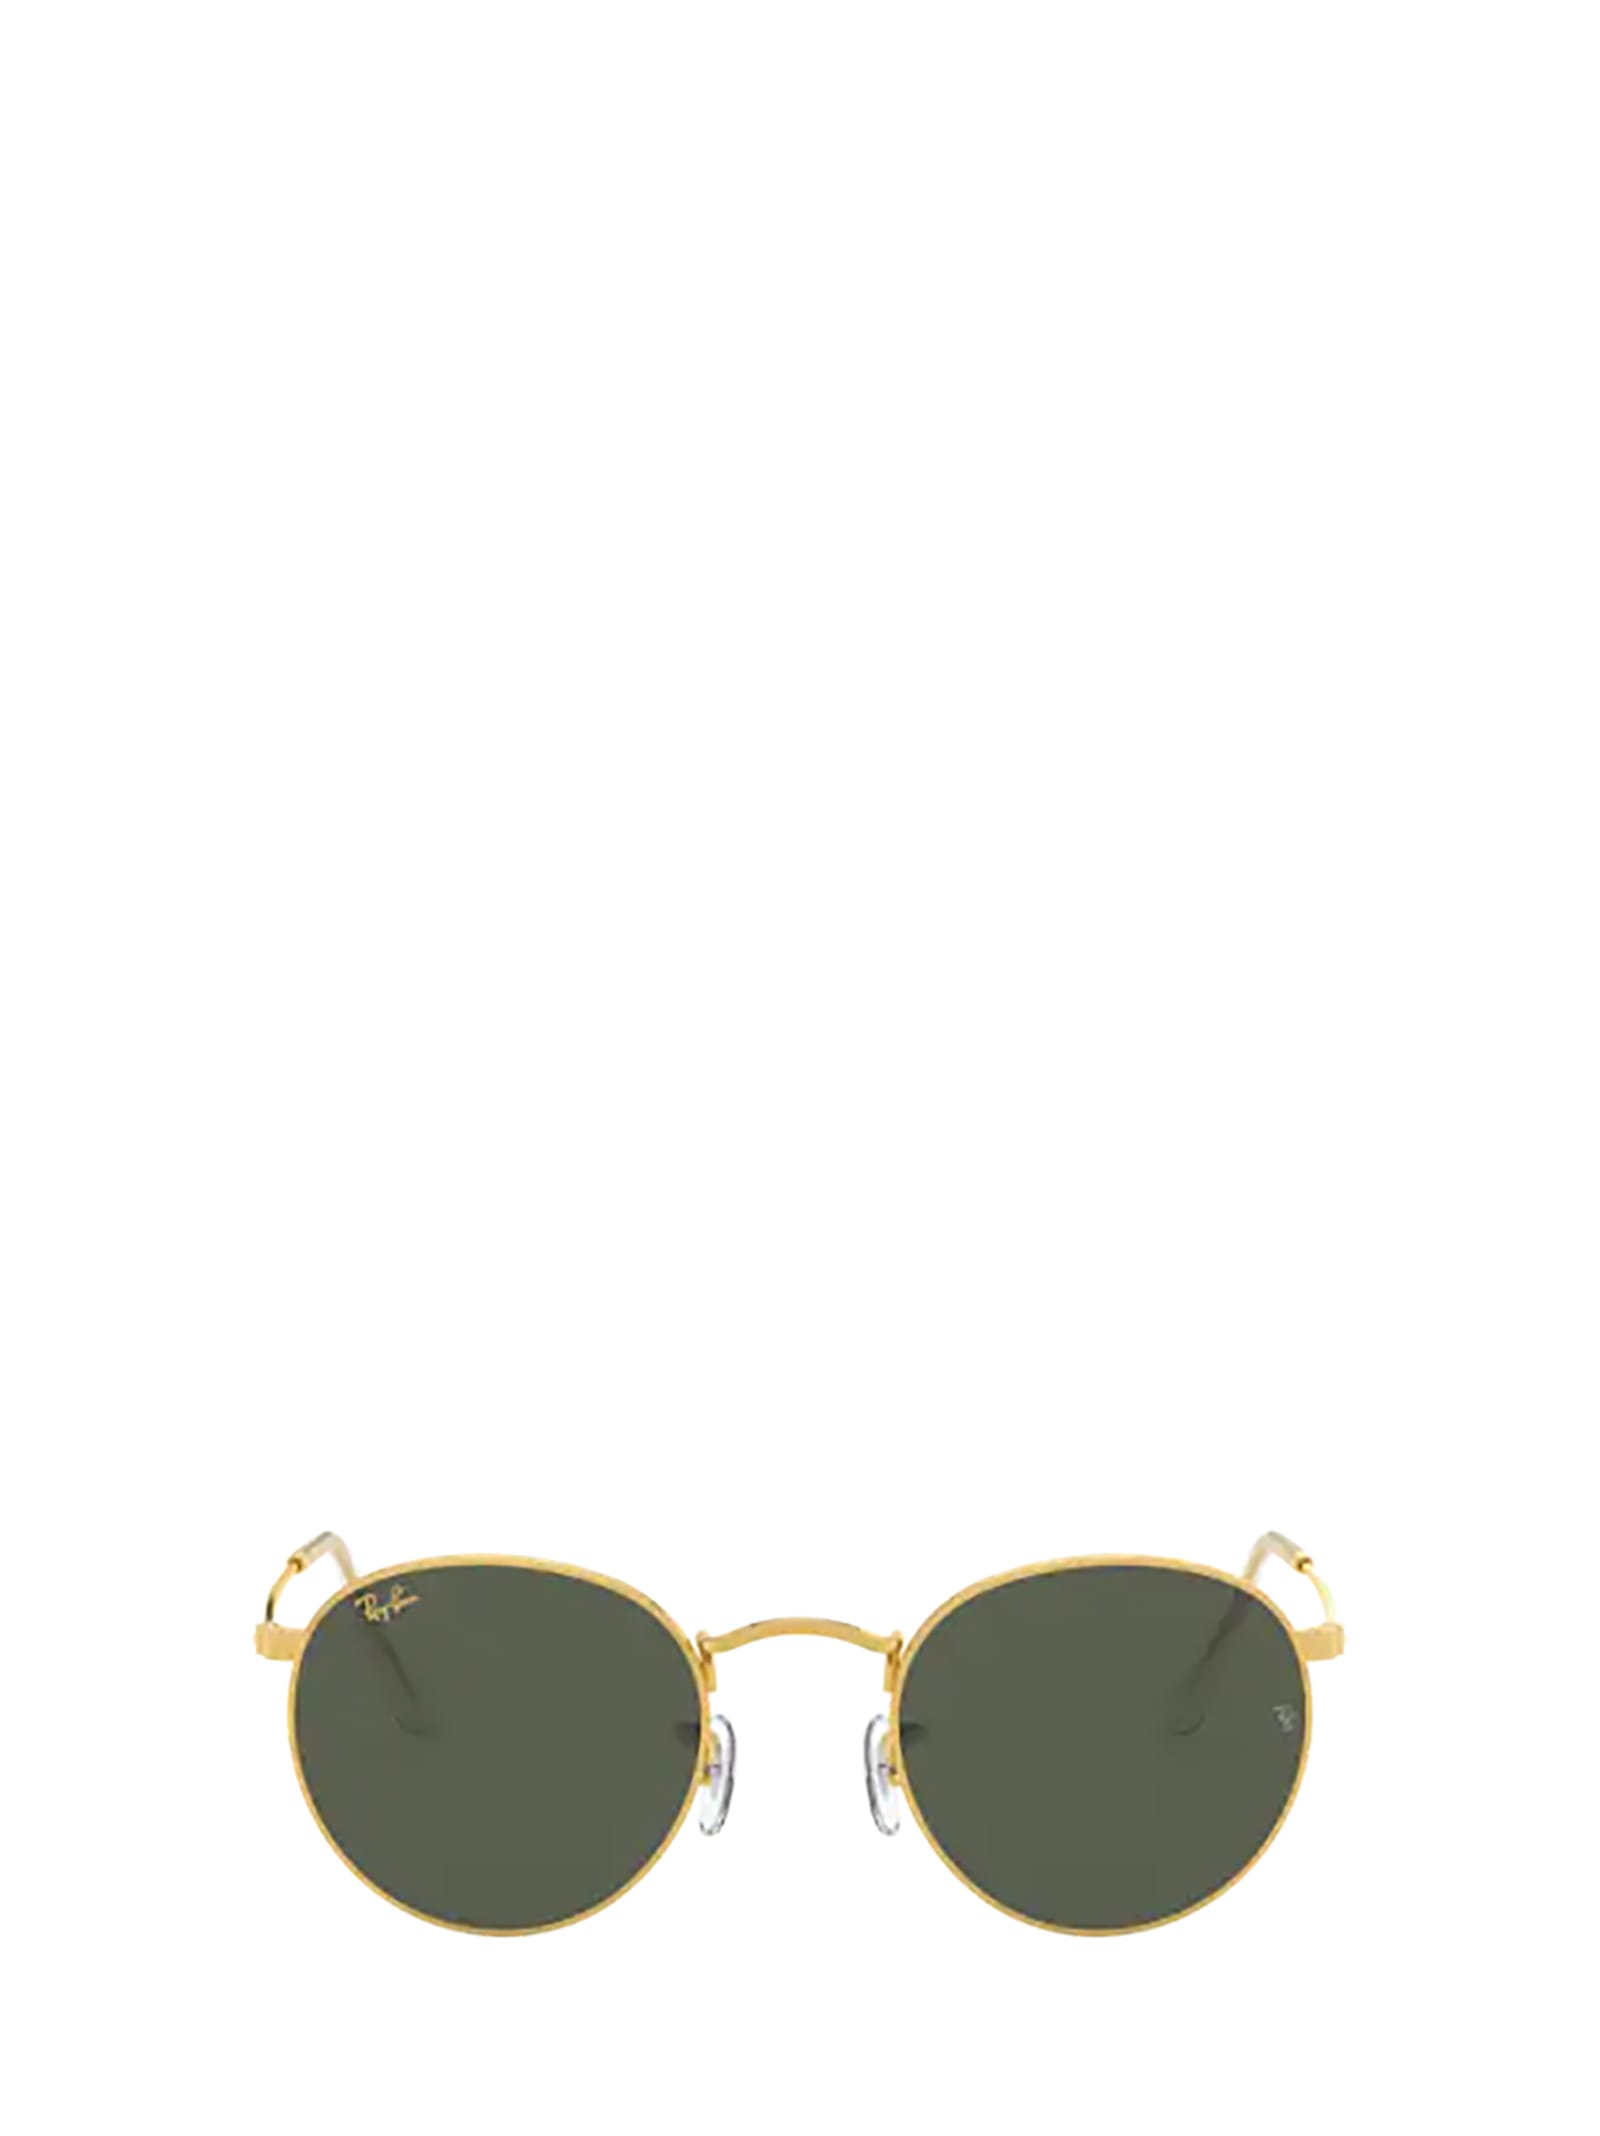 Ray Ban Rb3447 Legend Gold Sunglasses